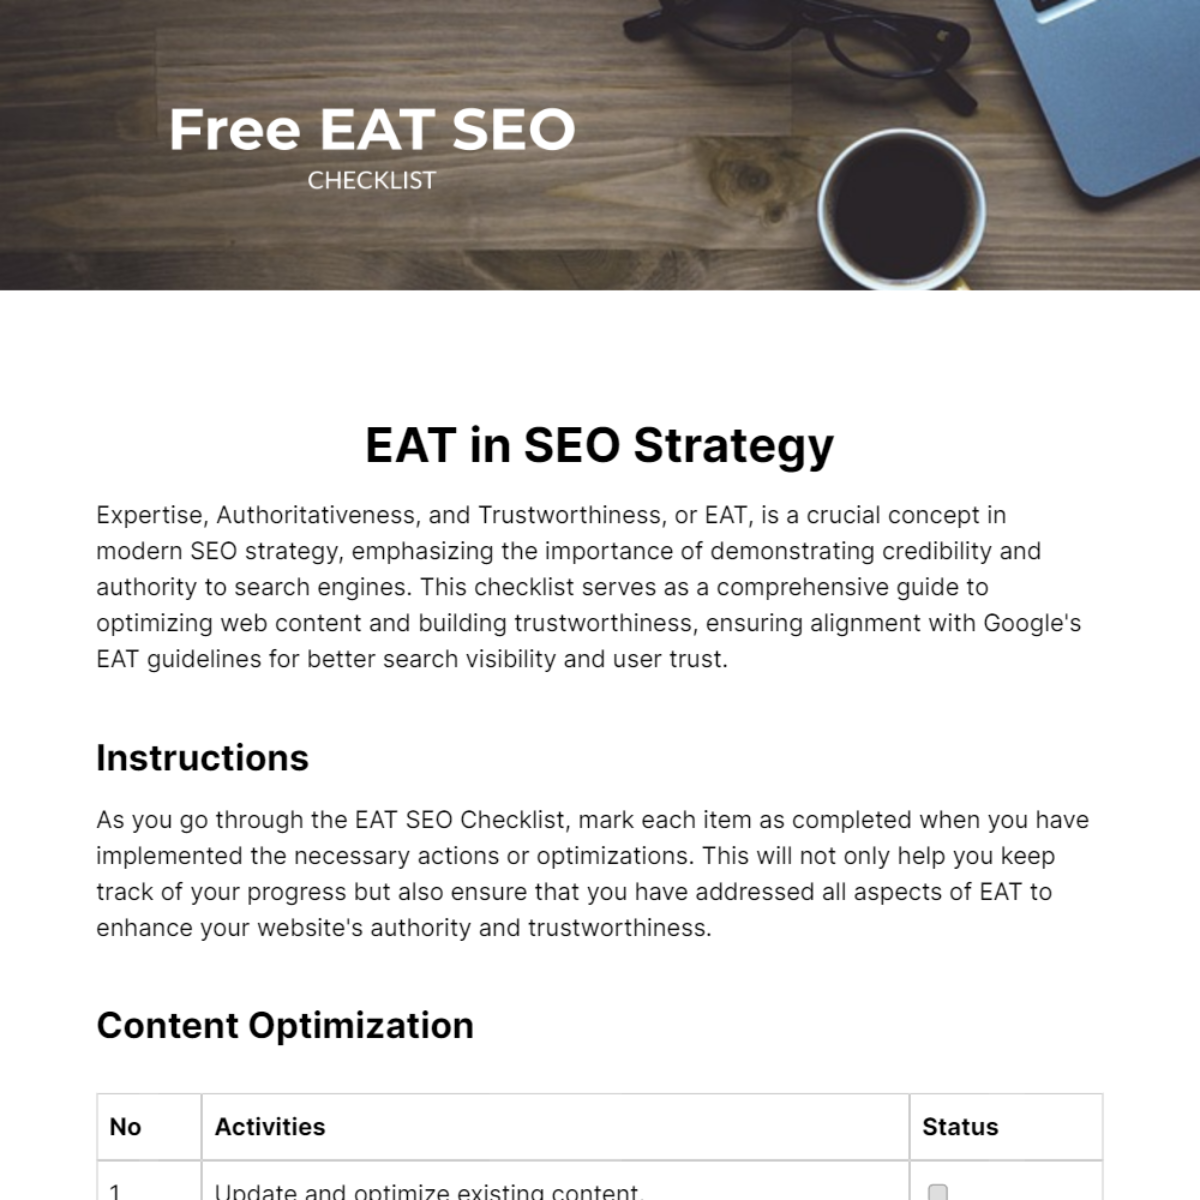 Free EAT SEO Checklist Template